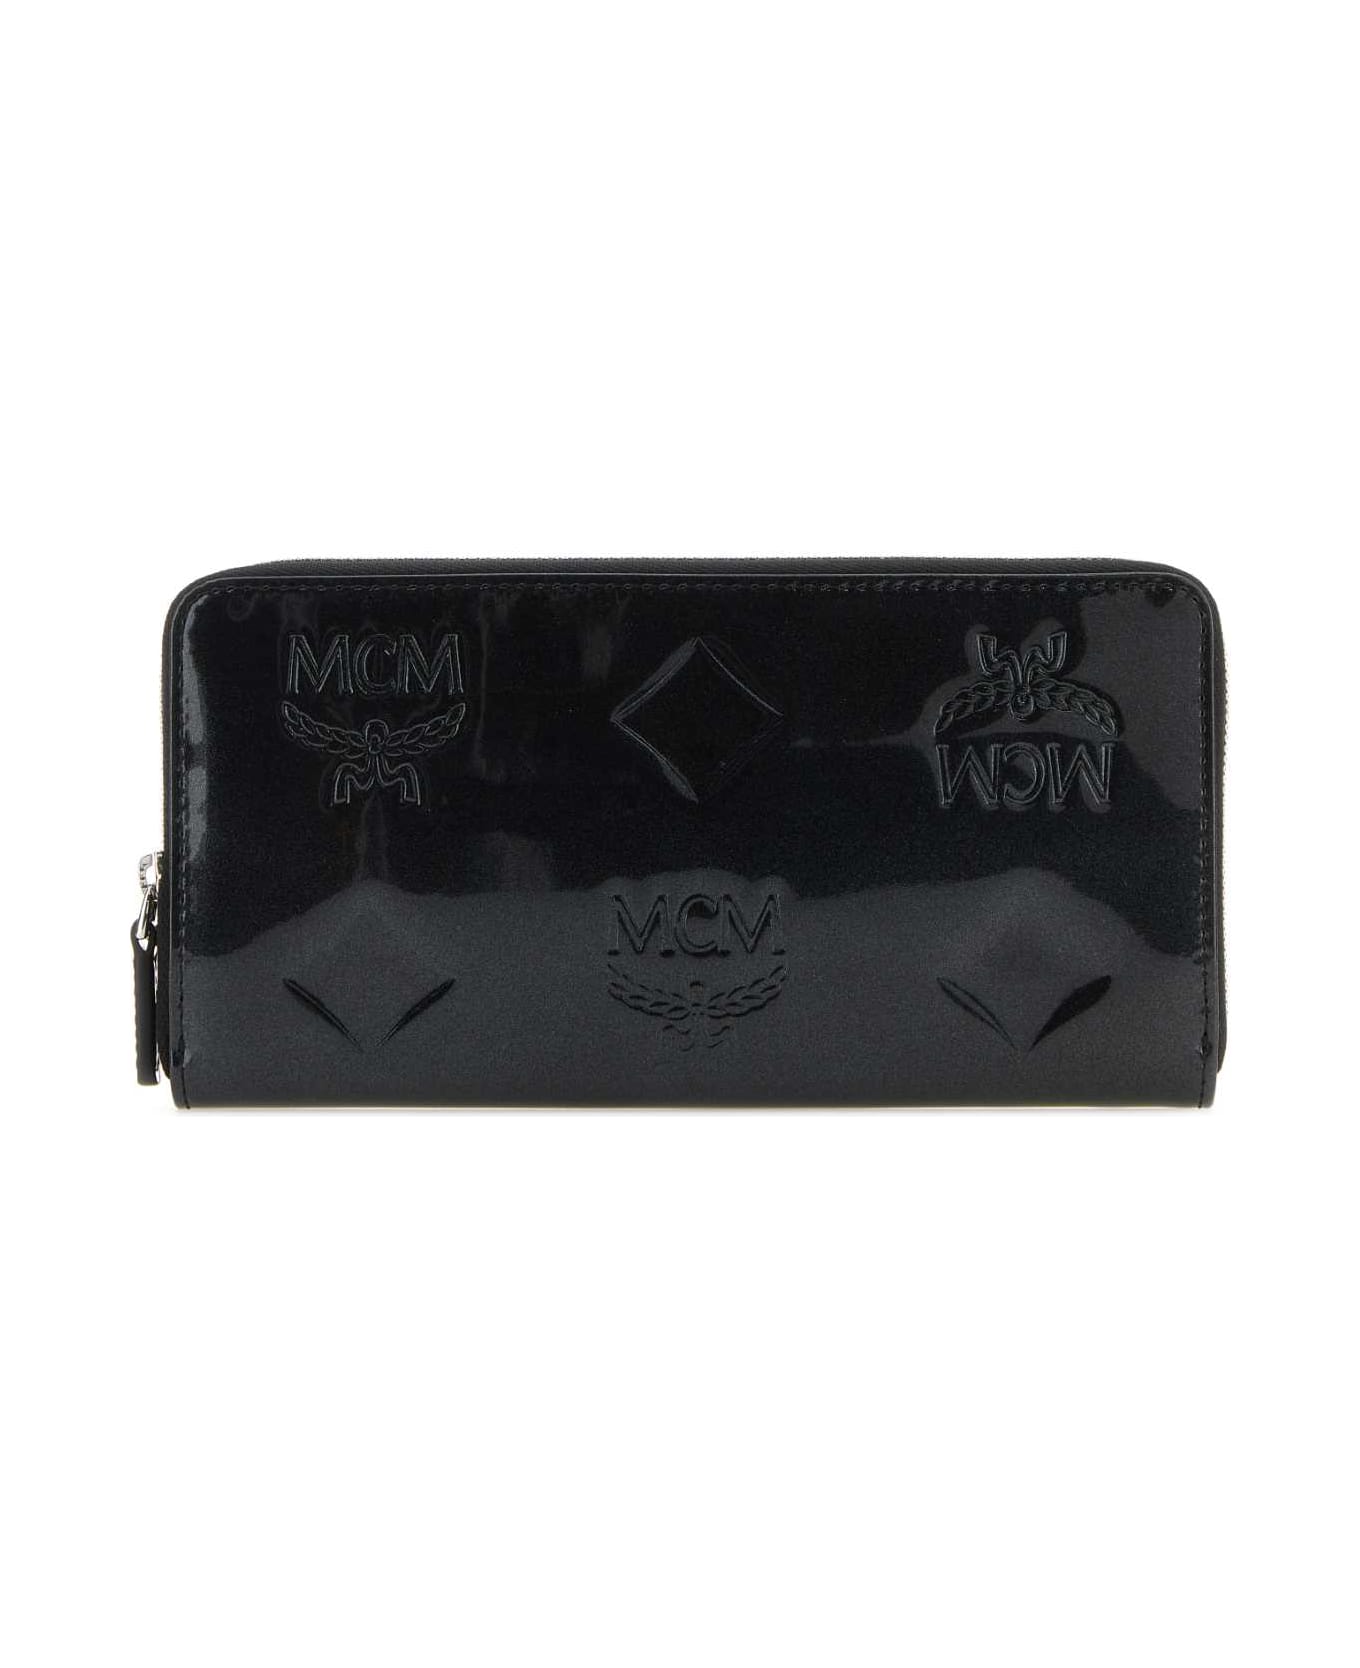 MCM Black Leather Wallet - BLACK 財布